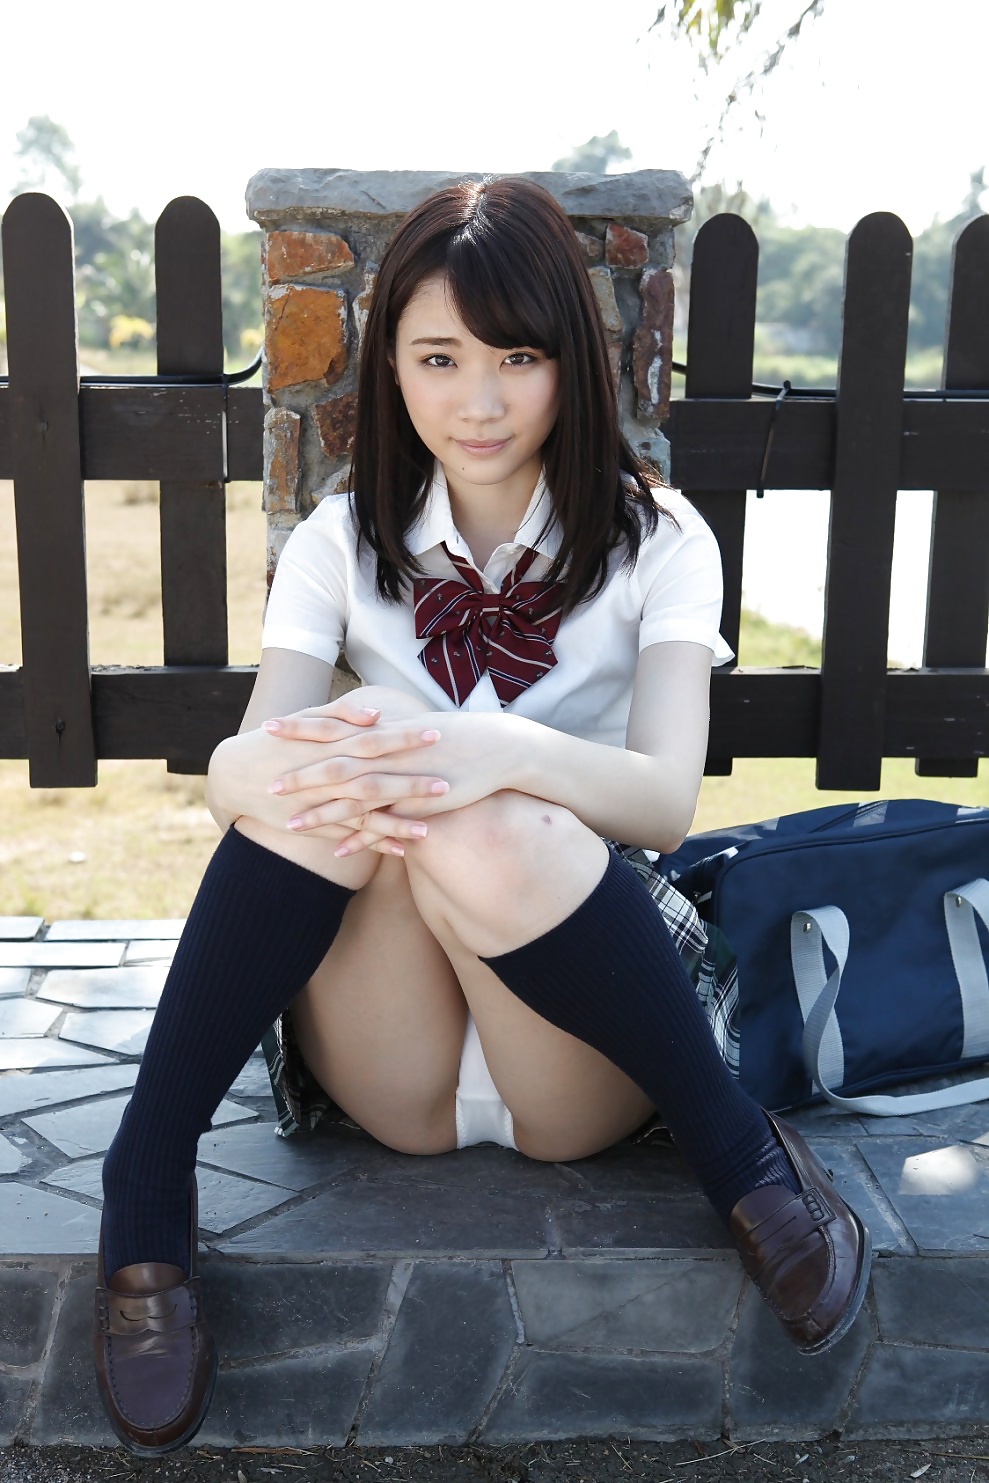 Hübsche japanische Schülerin prangt in Uniform. - Bild 5